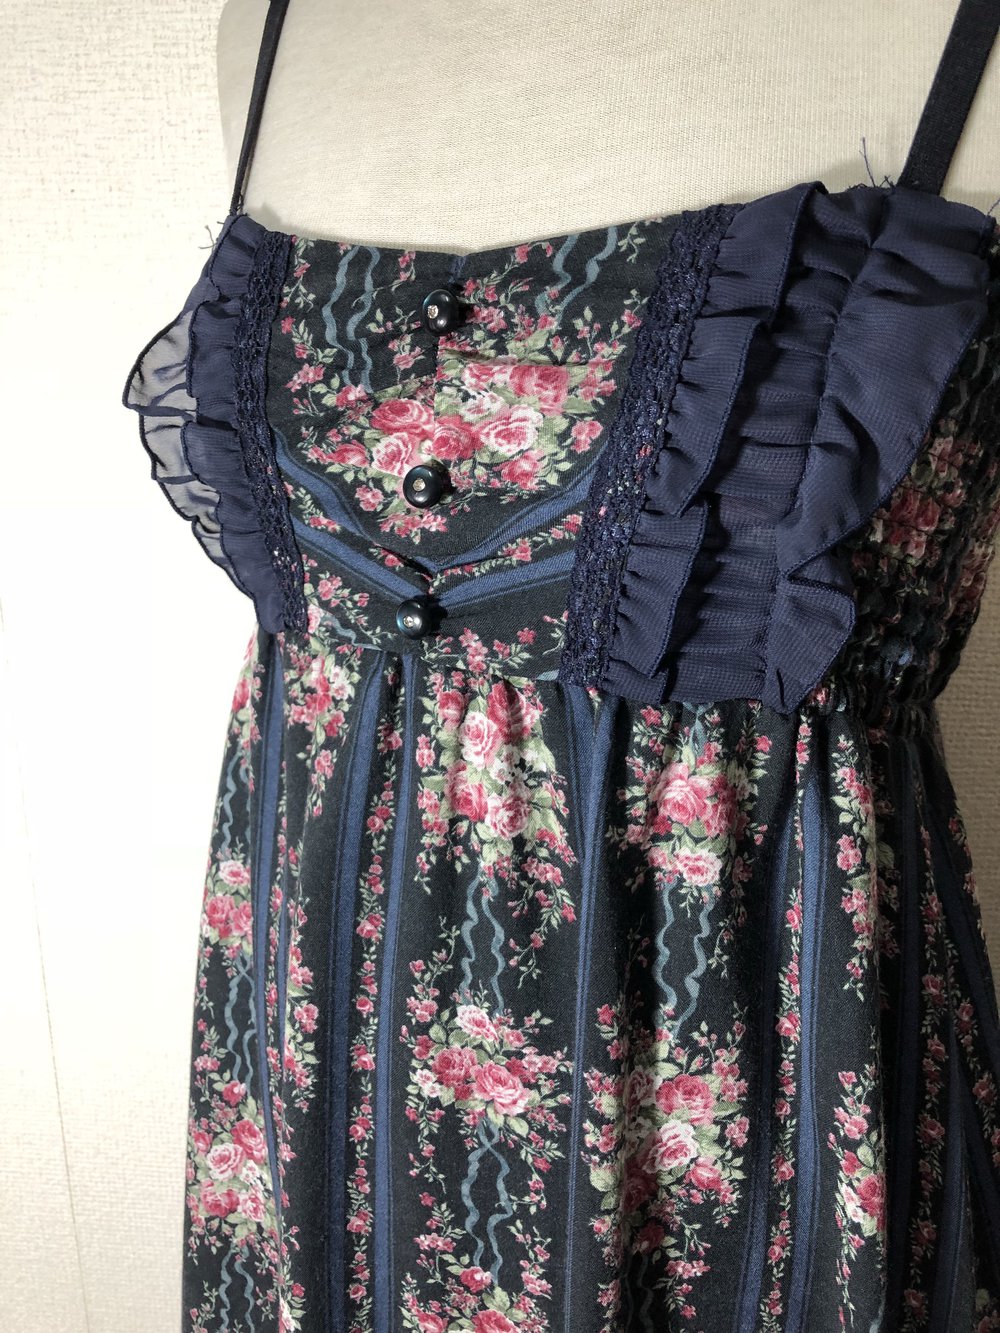 Axes Femme Rosen maxi Kleid in navy / dunkelblau m. Spitze, Rüschen, langes Kleid, Japan, boho